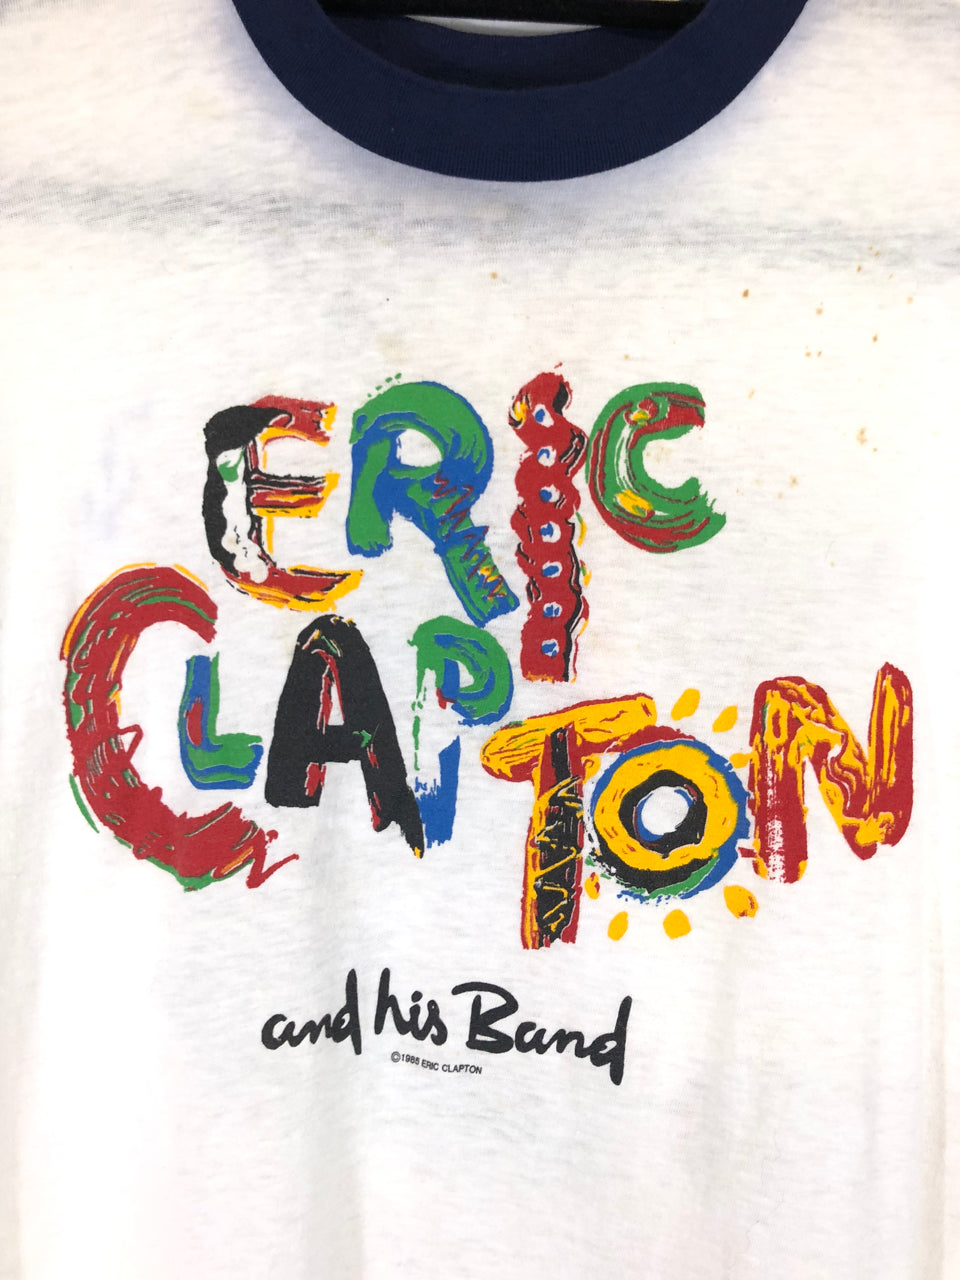 Eric Clapton Behind the Sun Tour 1985 Ringer T-Shirt